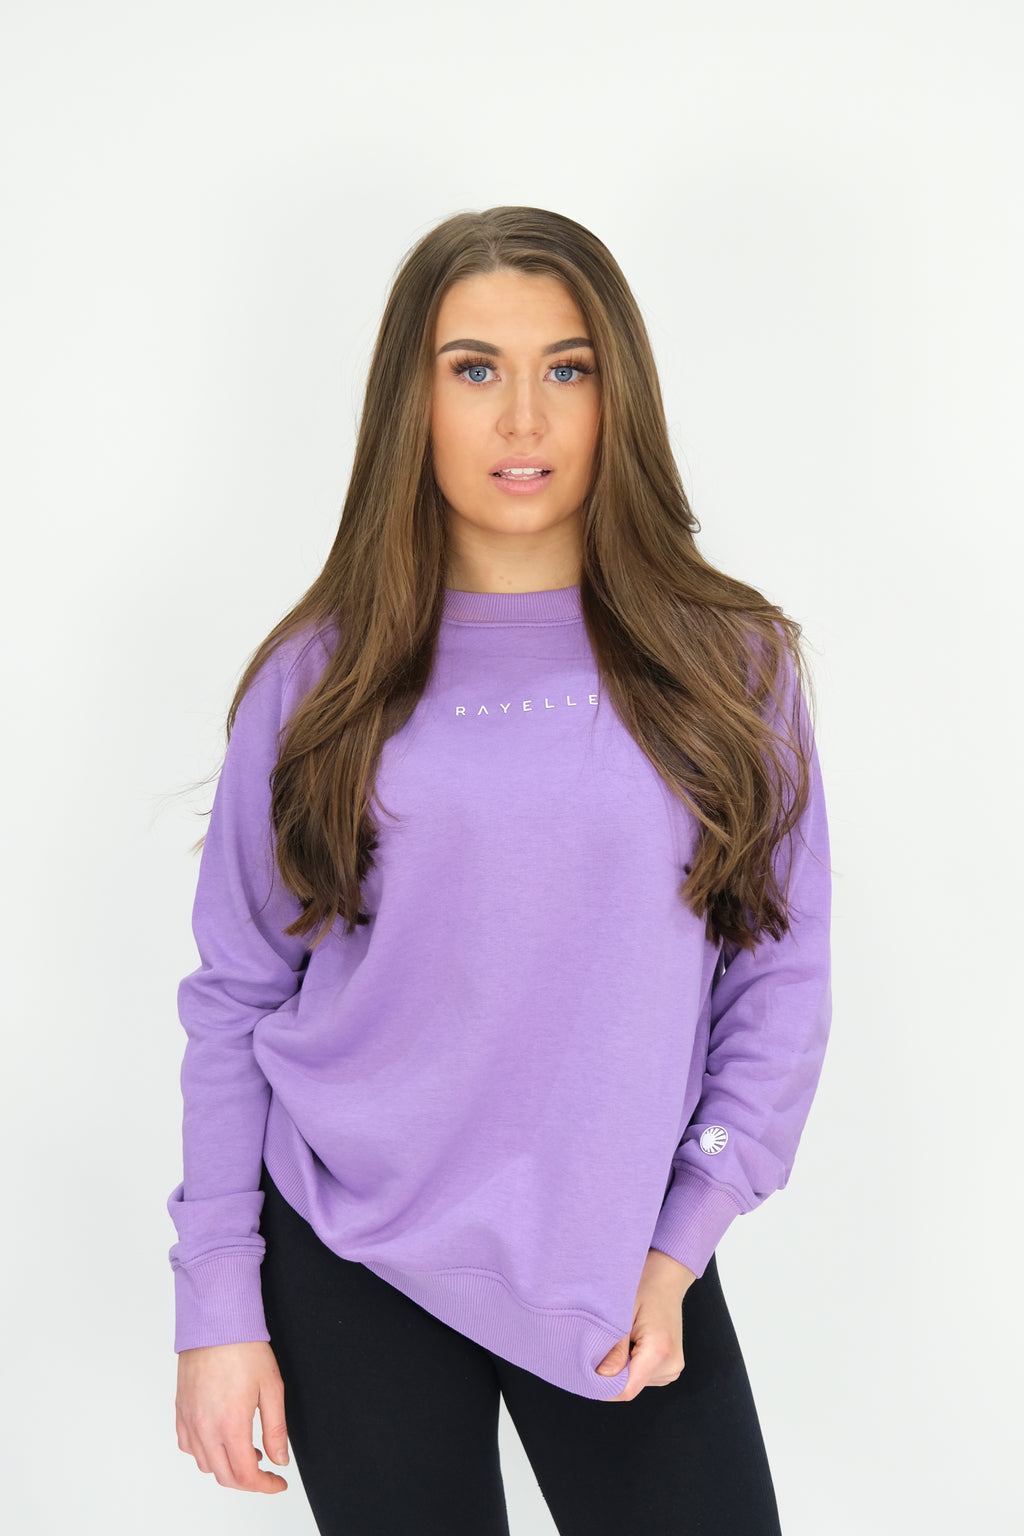 GREY/PINK LADIES TAYBERRY Sweatshirt - XL £7.99 - PicClick UK